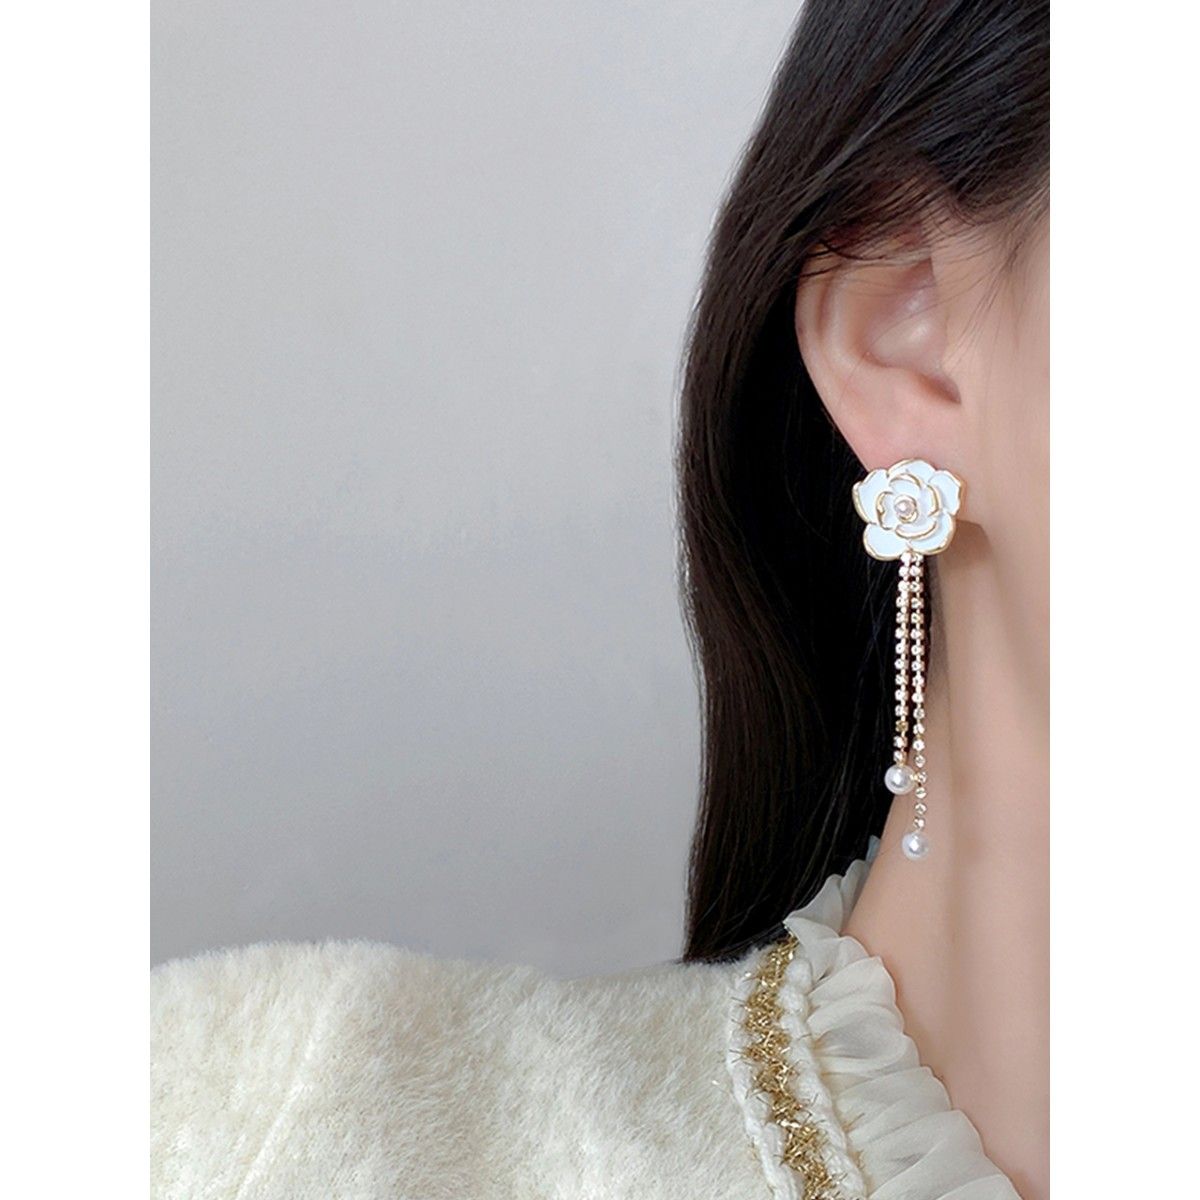 Buy Flower Dangle Drop Earrings Chain Flower Earrings Gift for Her Online  in India  Etsy